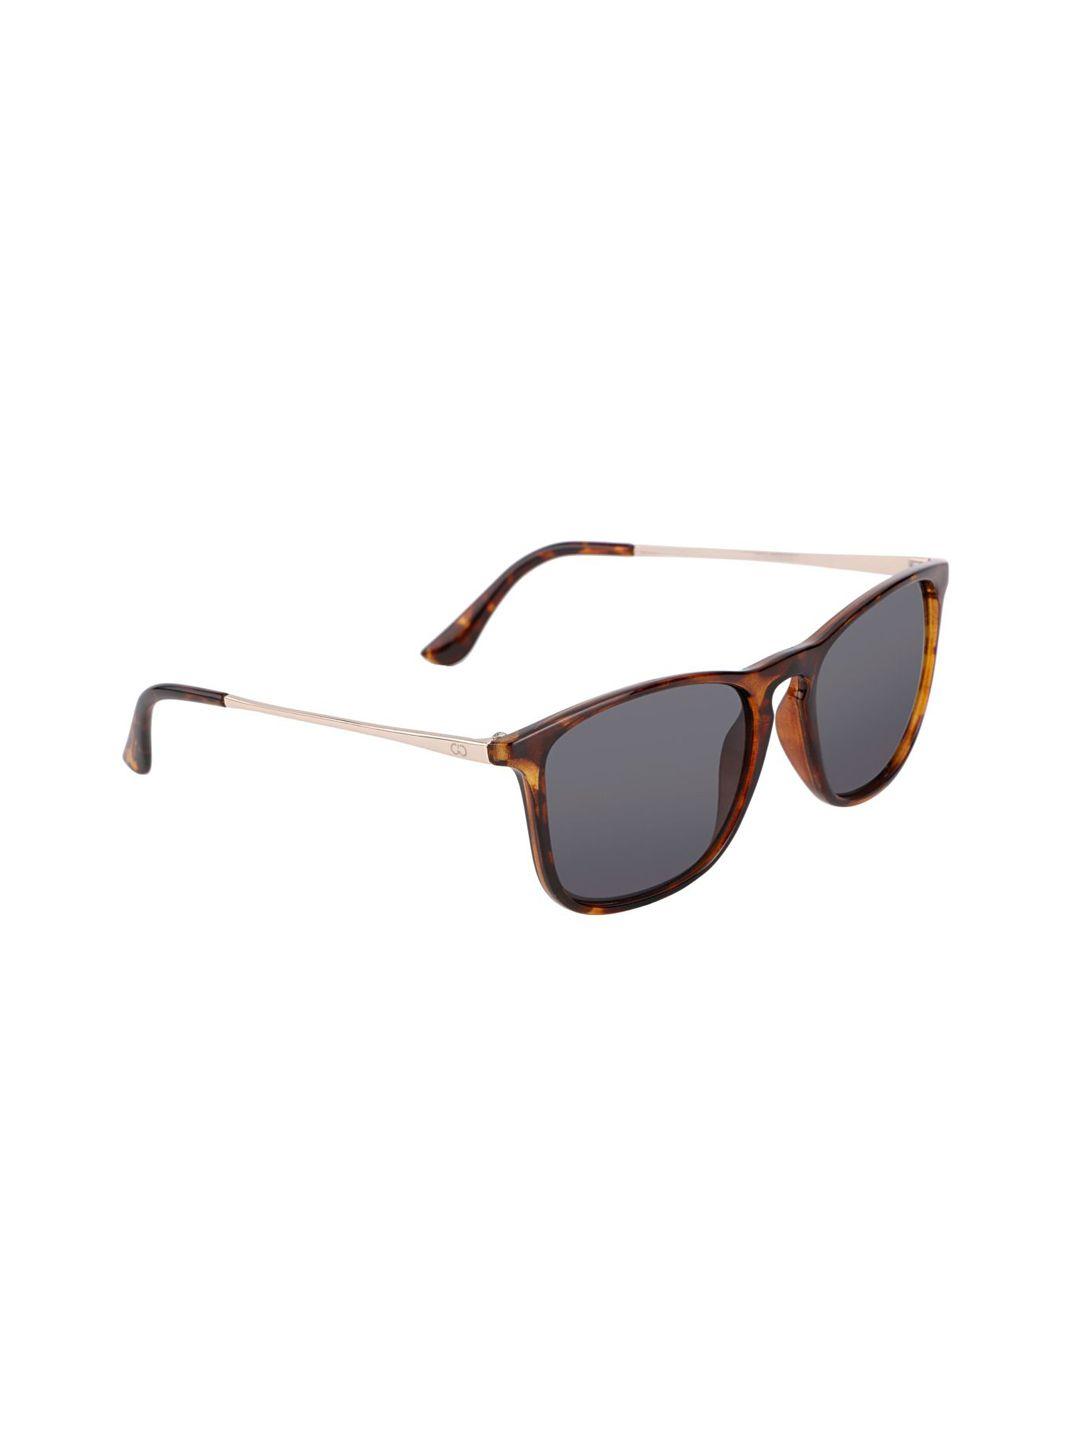 gio collection unisex wayfarer sunglasses g7057tbrw